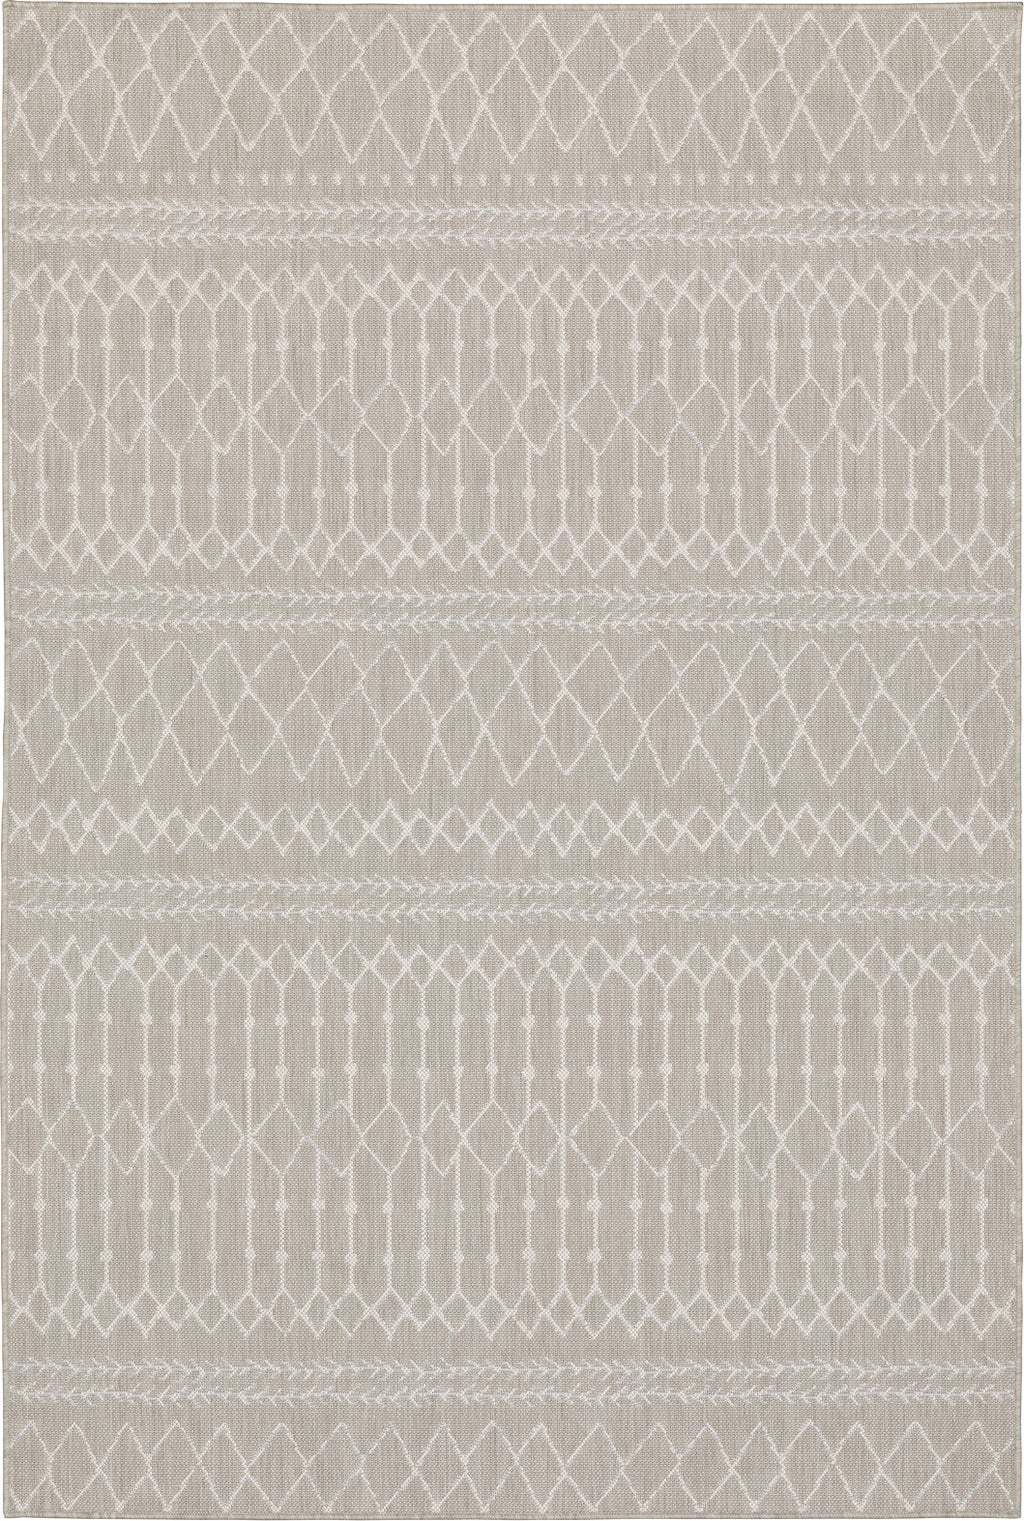 Oriental Weavers Portofino 670H4 Grey/Ivory Area Rug main image featured